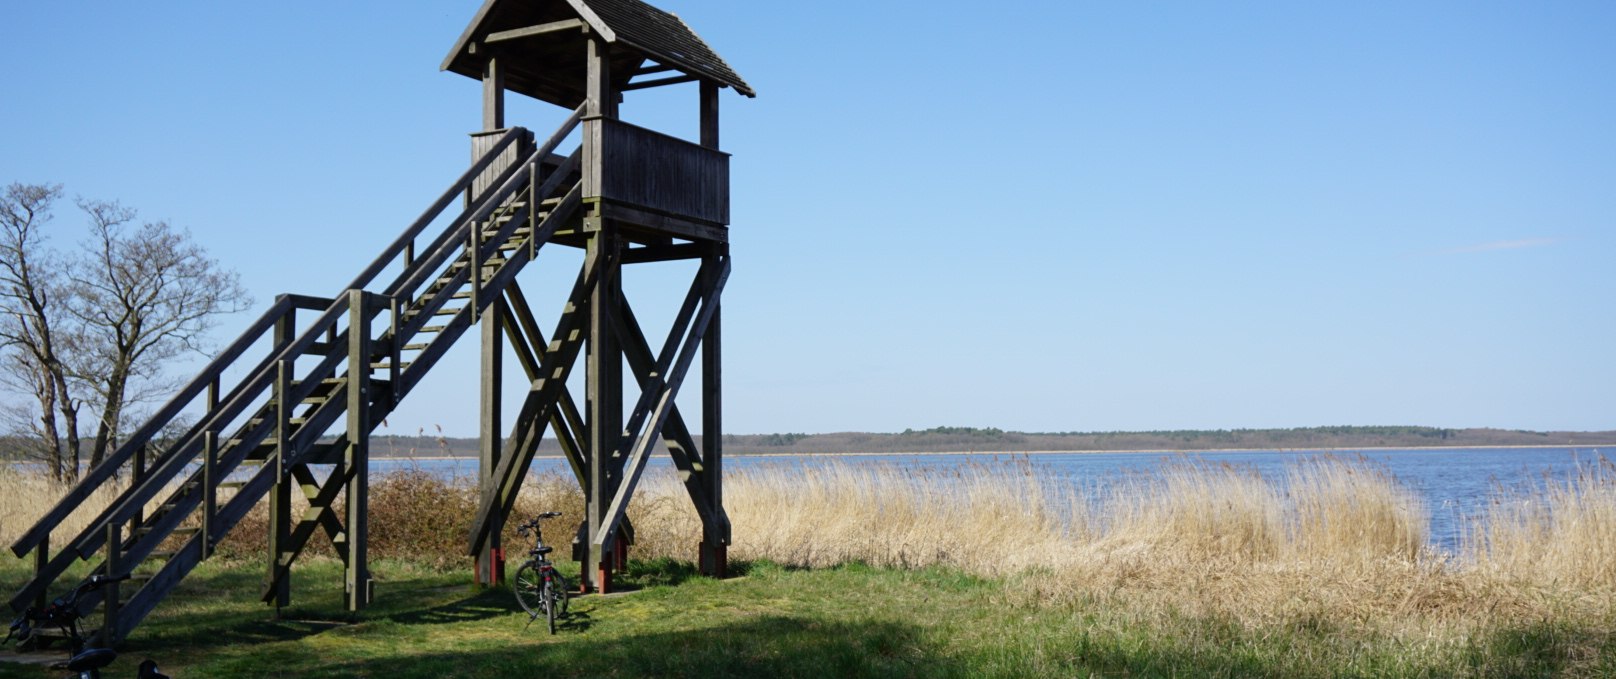 Observation tower at Neuwarper Lake, © tvv-bock